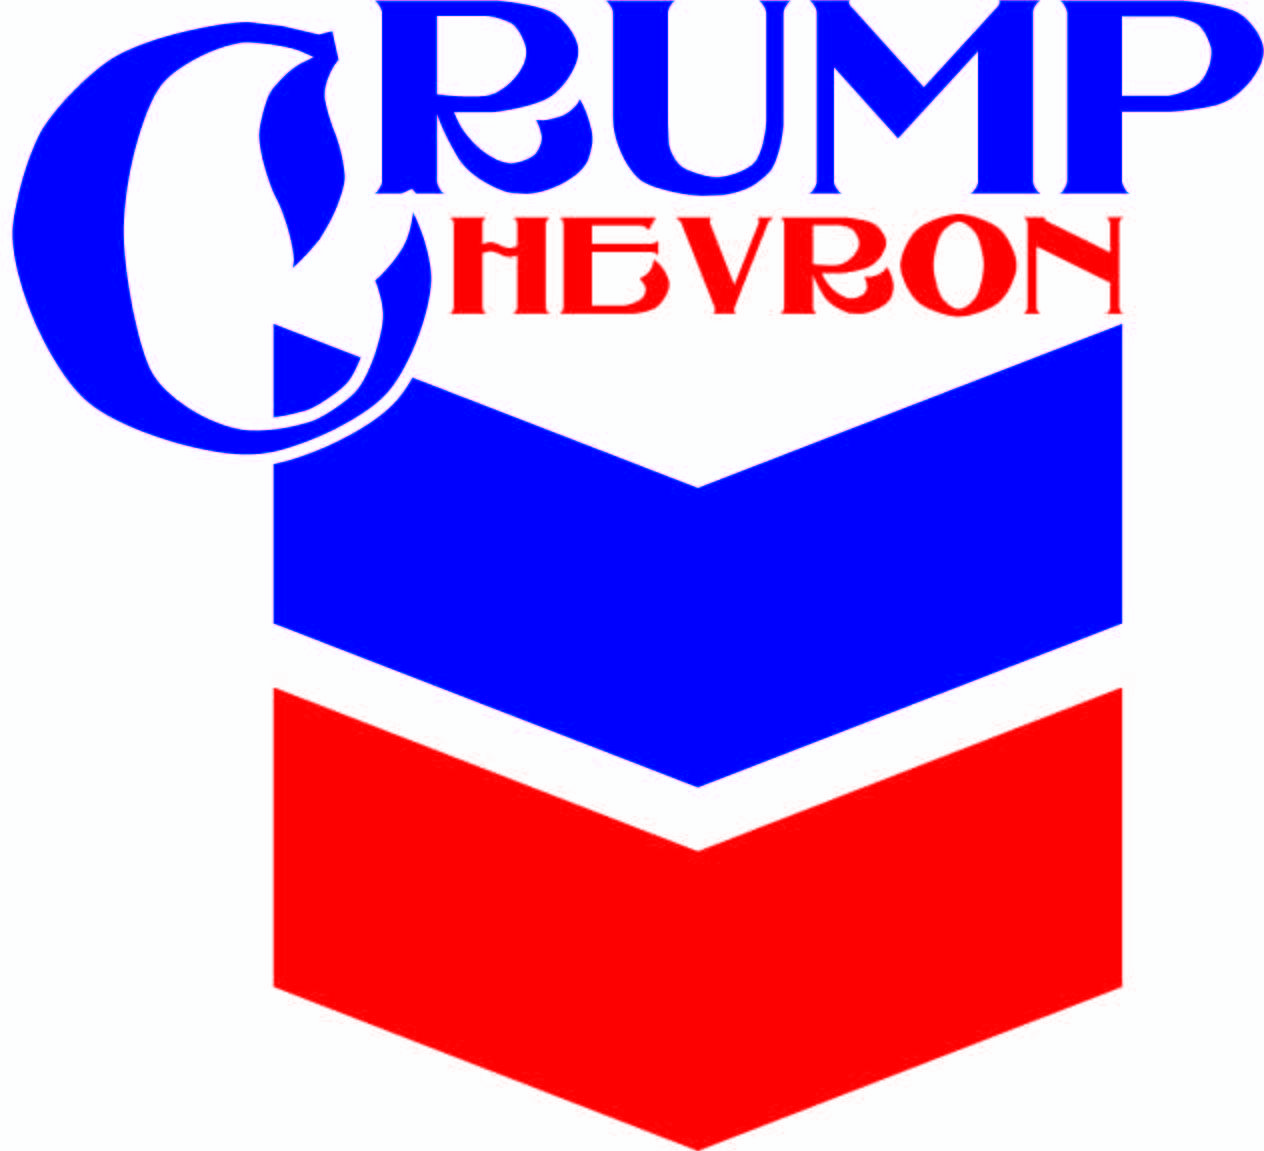 Blue and Red Chevron Logo - Crump Chevron - Riggins Idaho